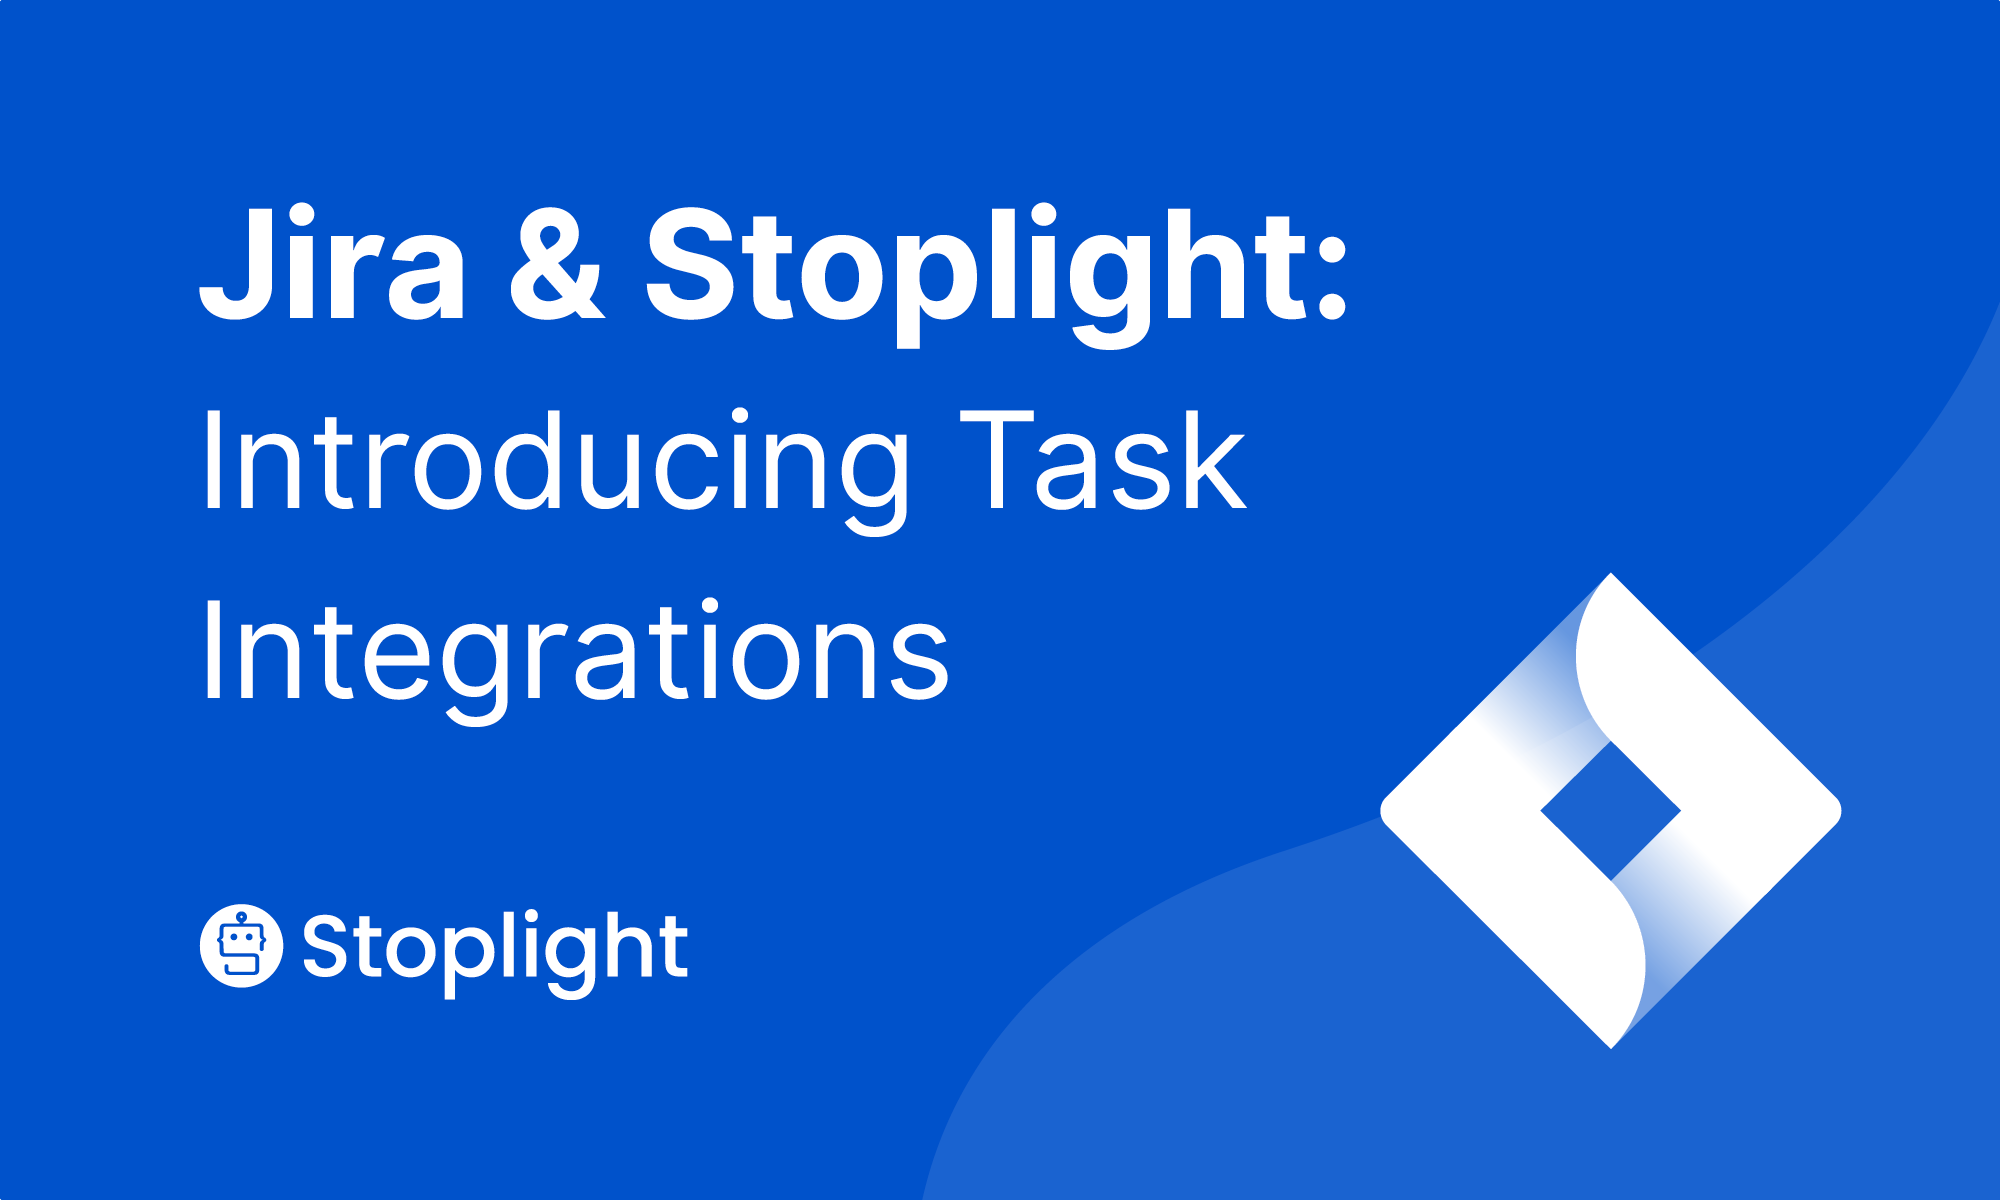 Jira & Stoplight: Introducing Task Integrations